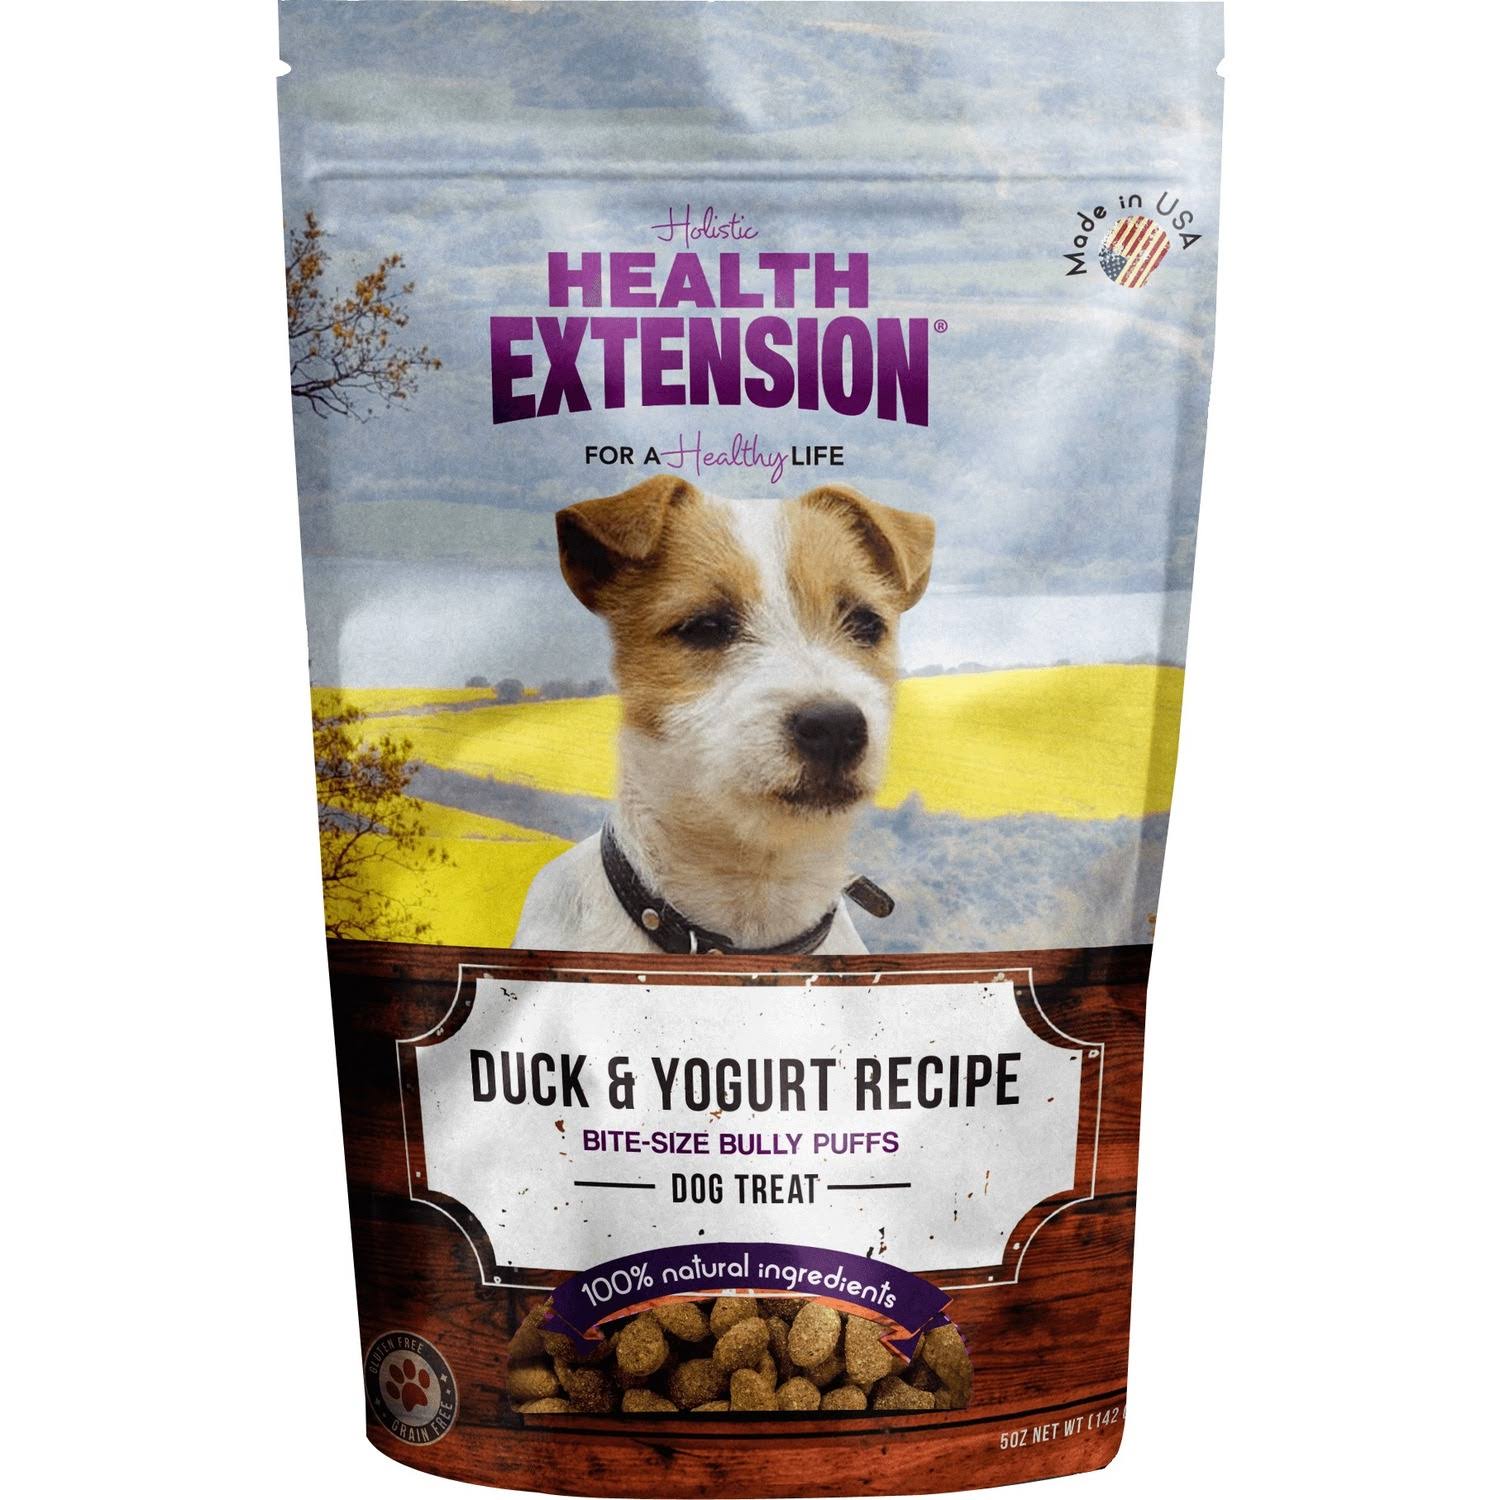 Health Extension Bully Puffs Holistic Dog Treats - Duck & Yogurt Grain, 5oz Bag